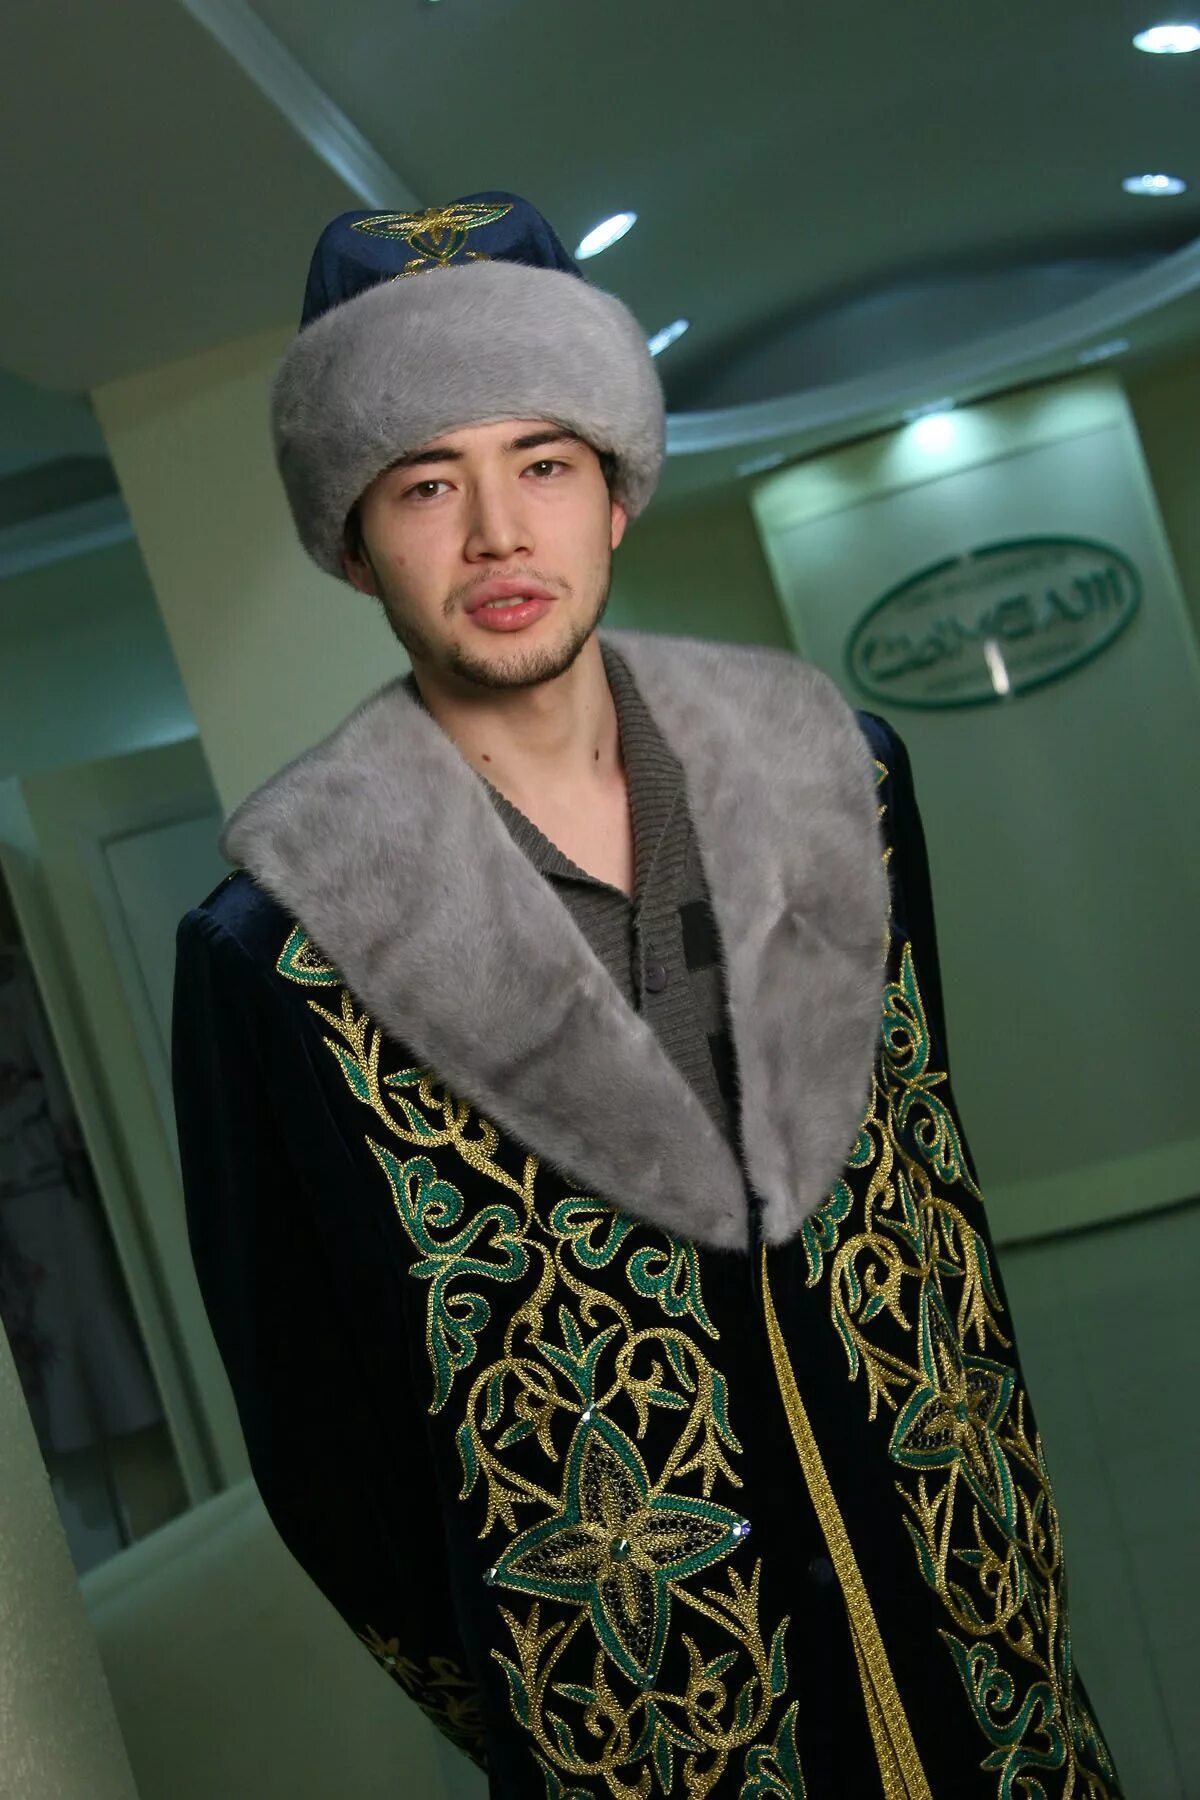 Kazakh me. Казах man. Казахская одежда мужская. Казахская мода мужская. Казахи мужики.